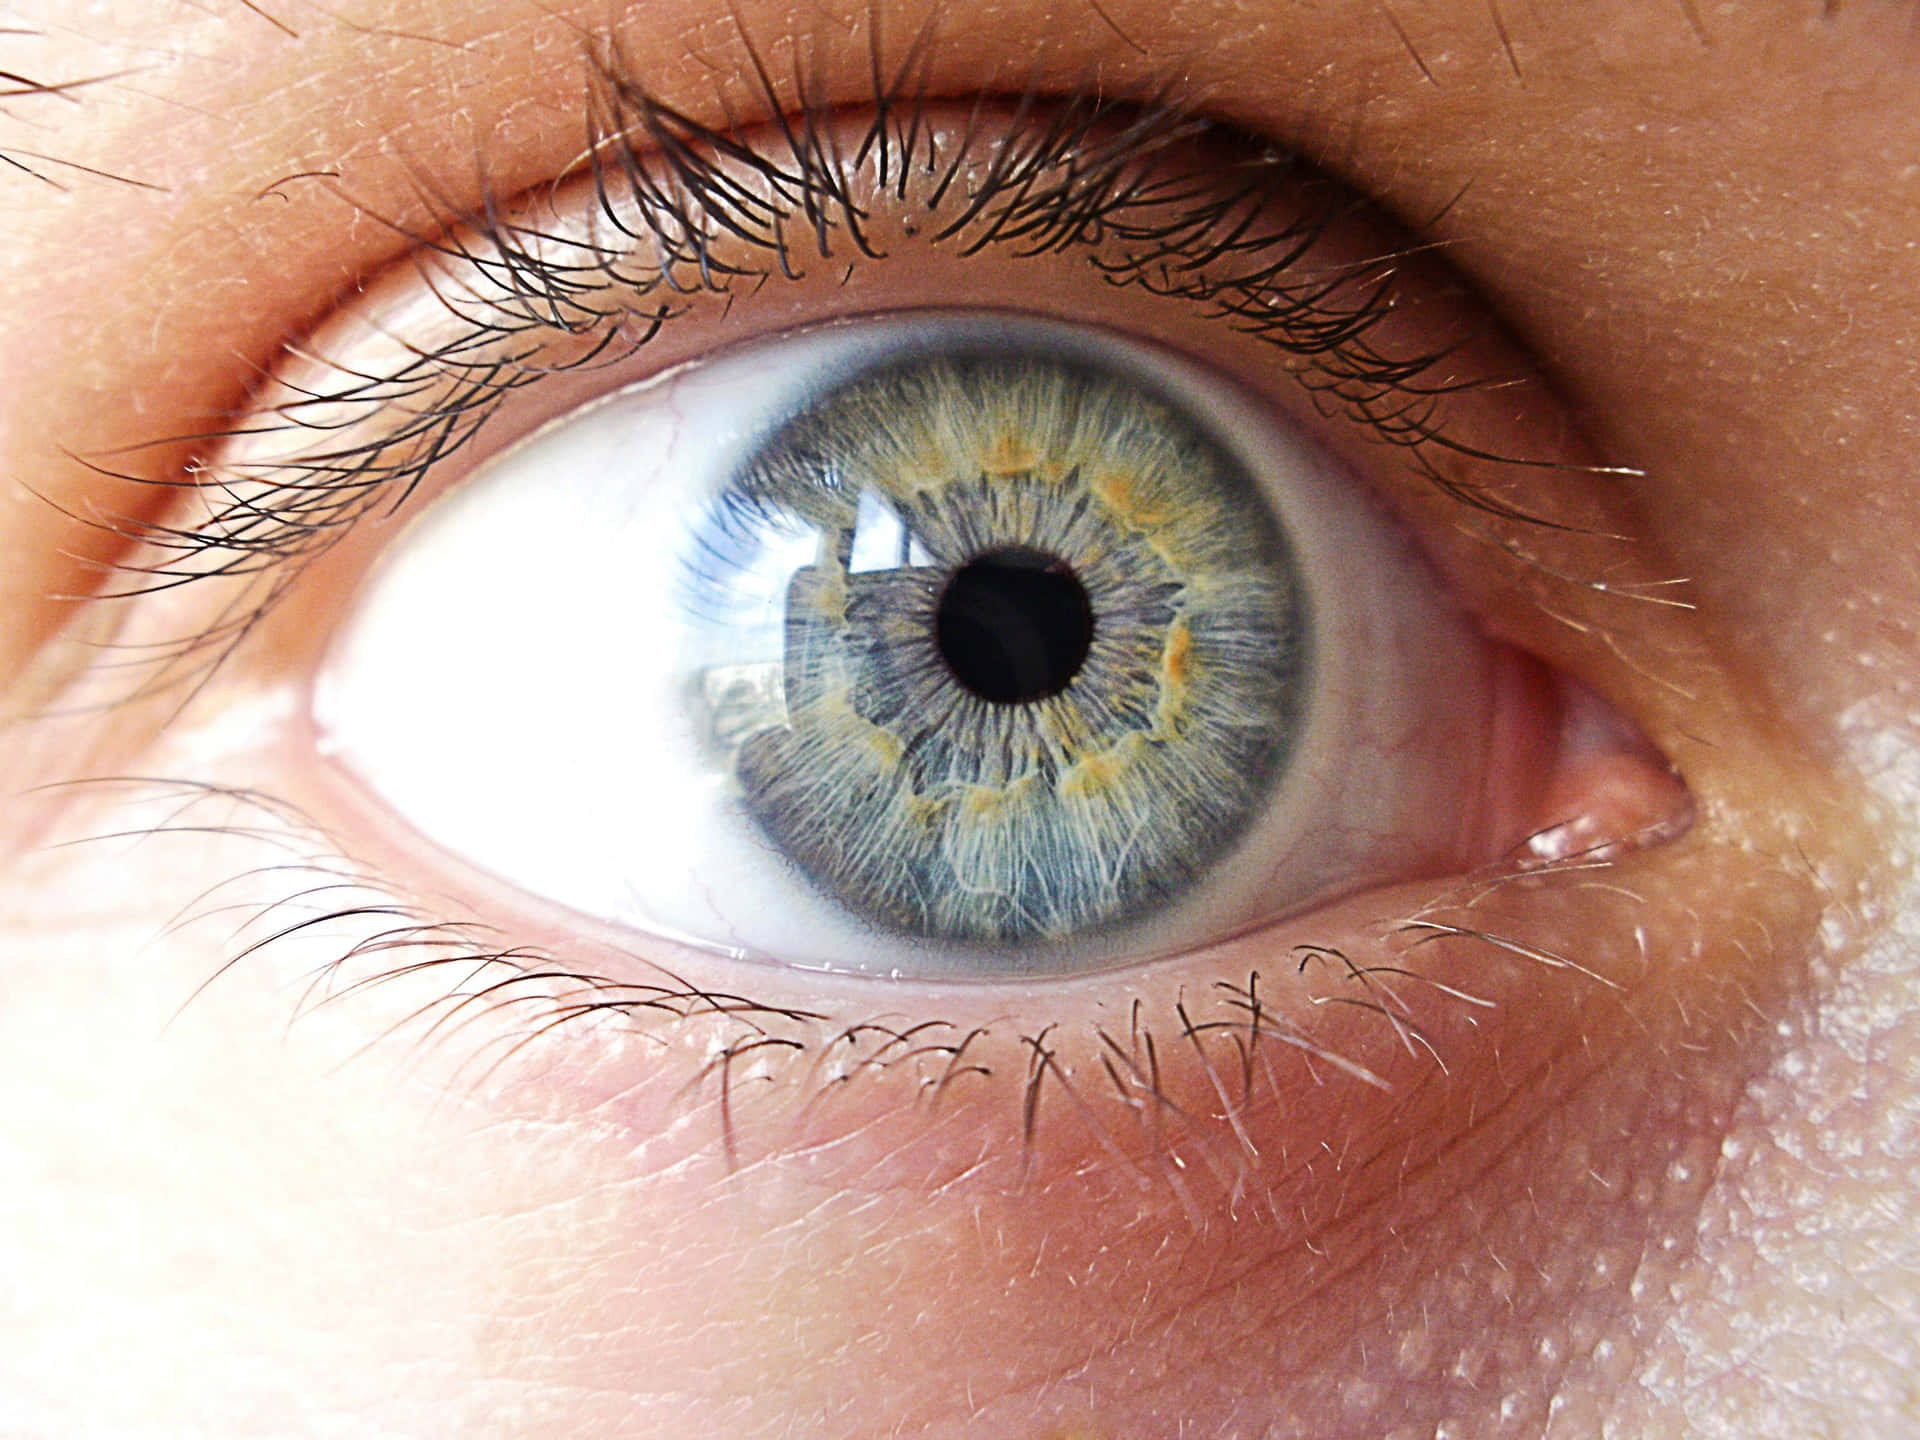 Captivating Gaze: A Close-Up of Human Eyes